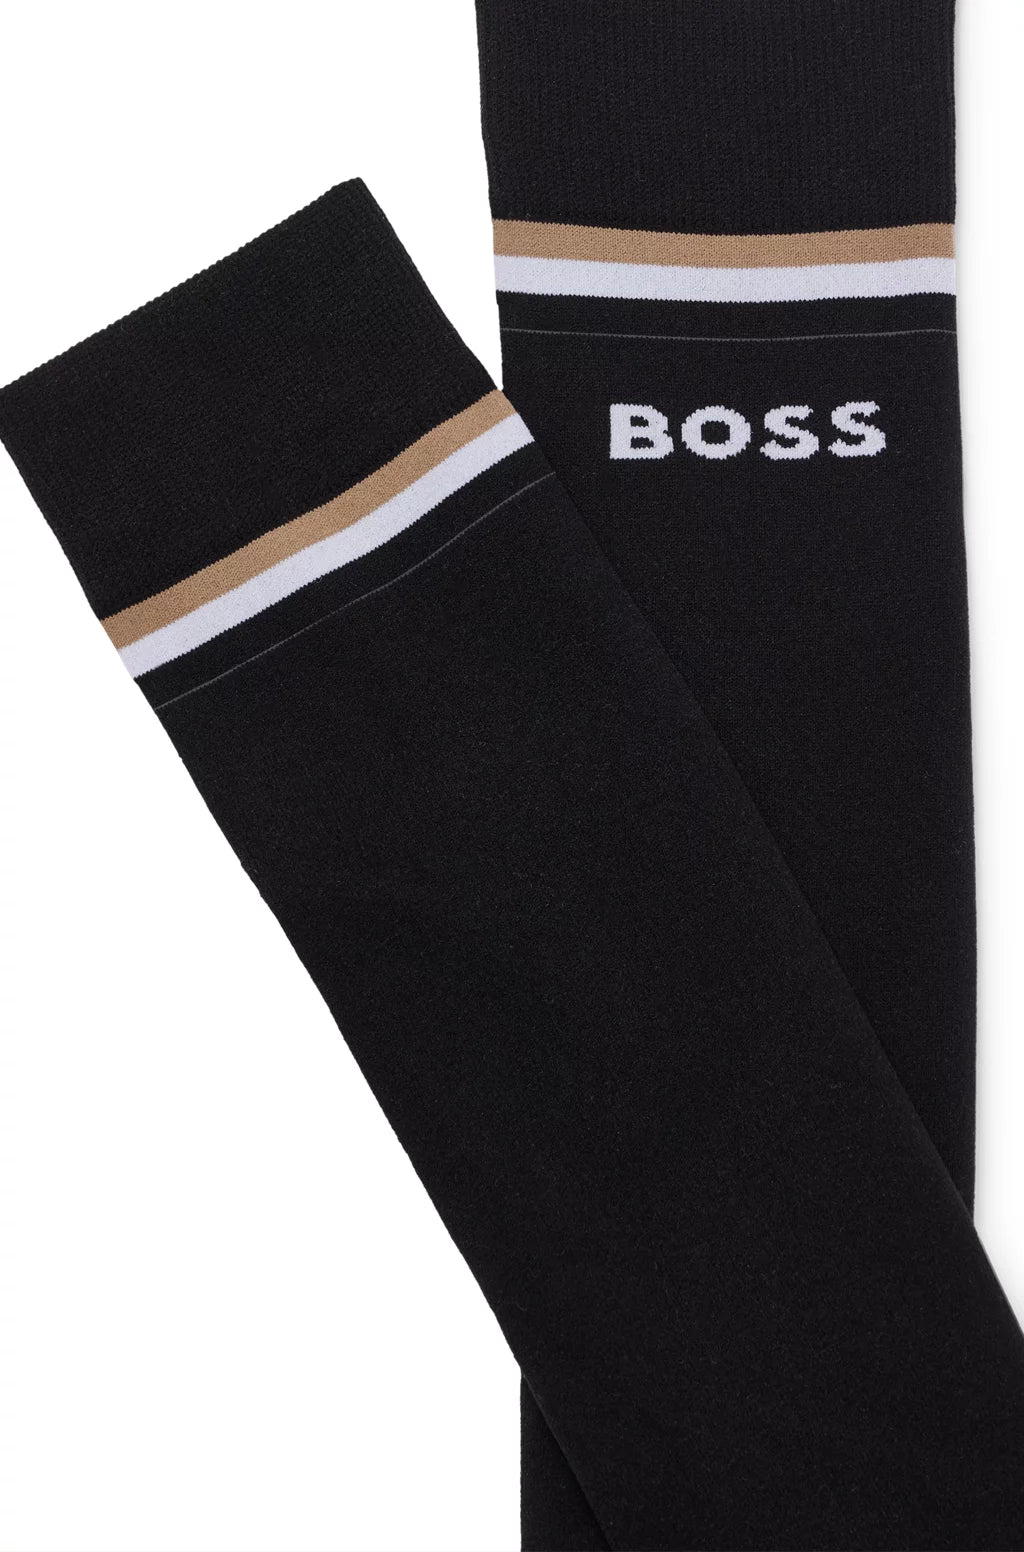 Boss Equestrian unisex socks 